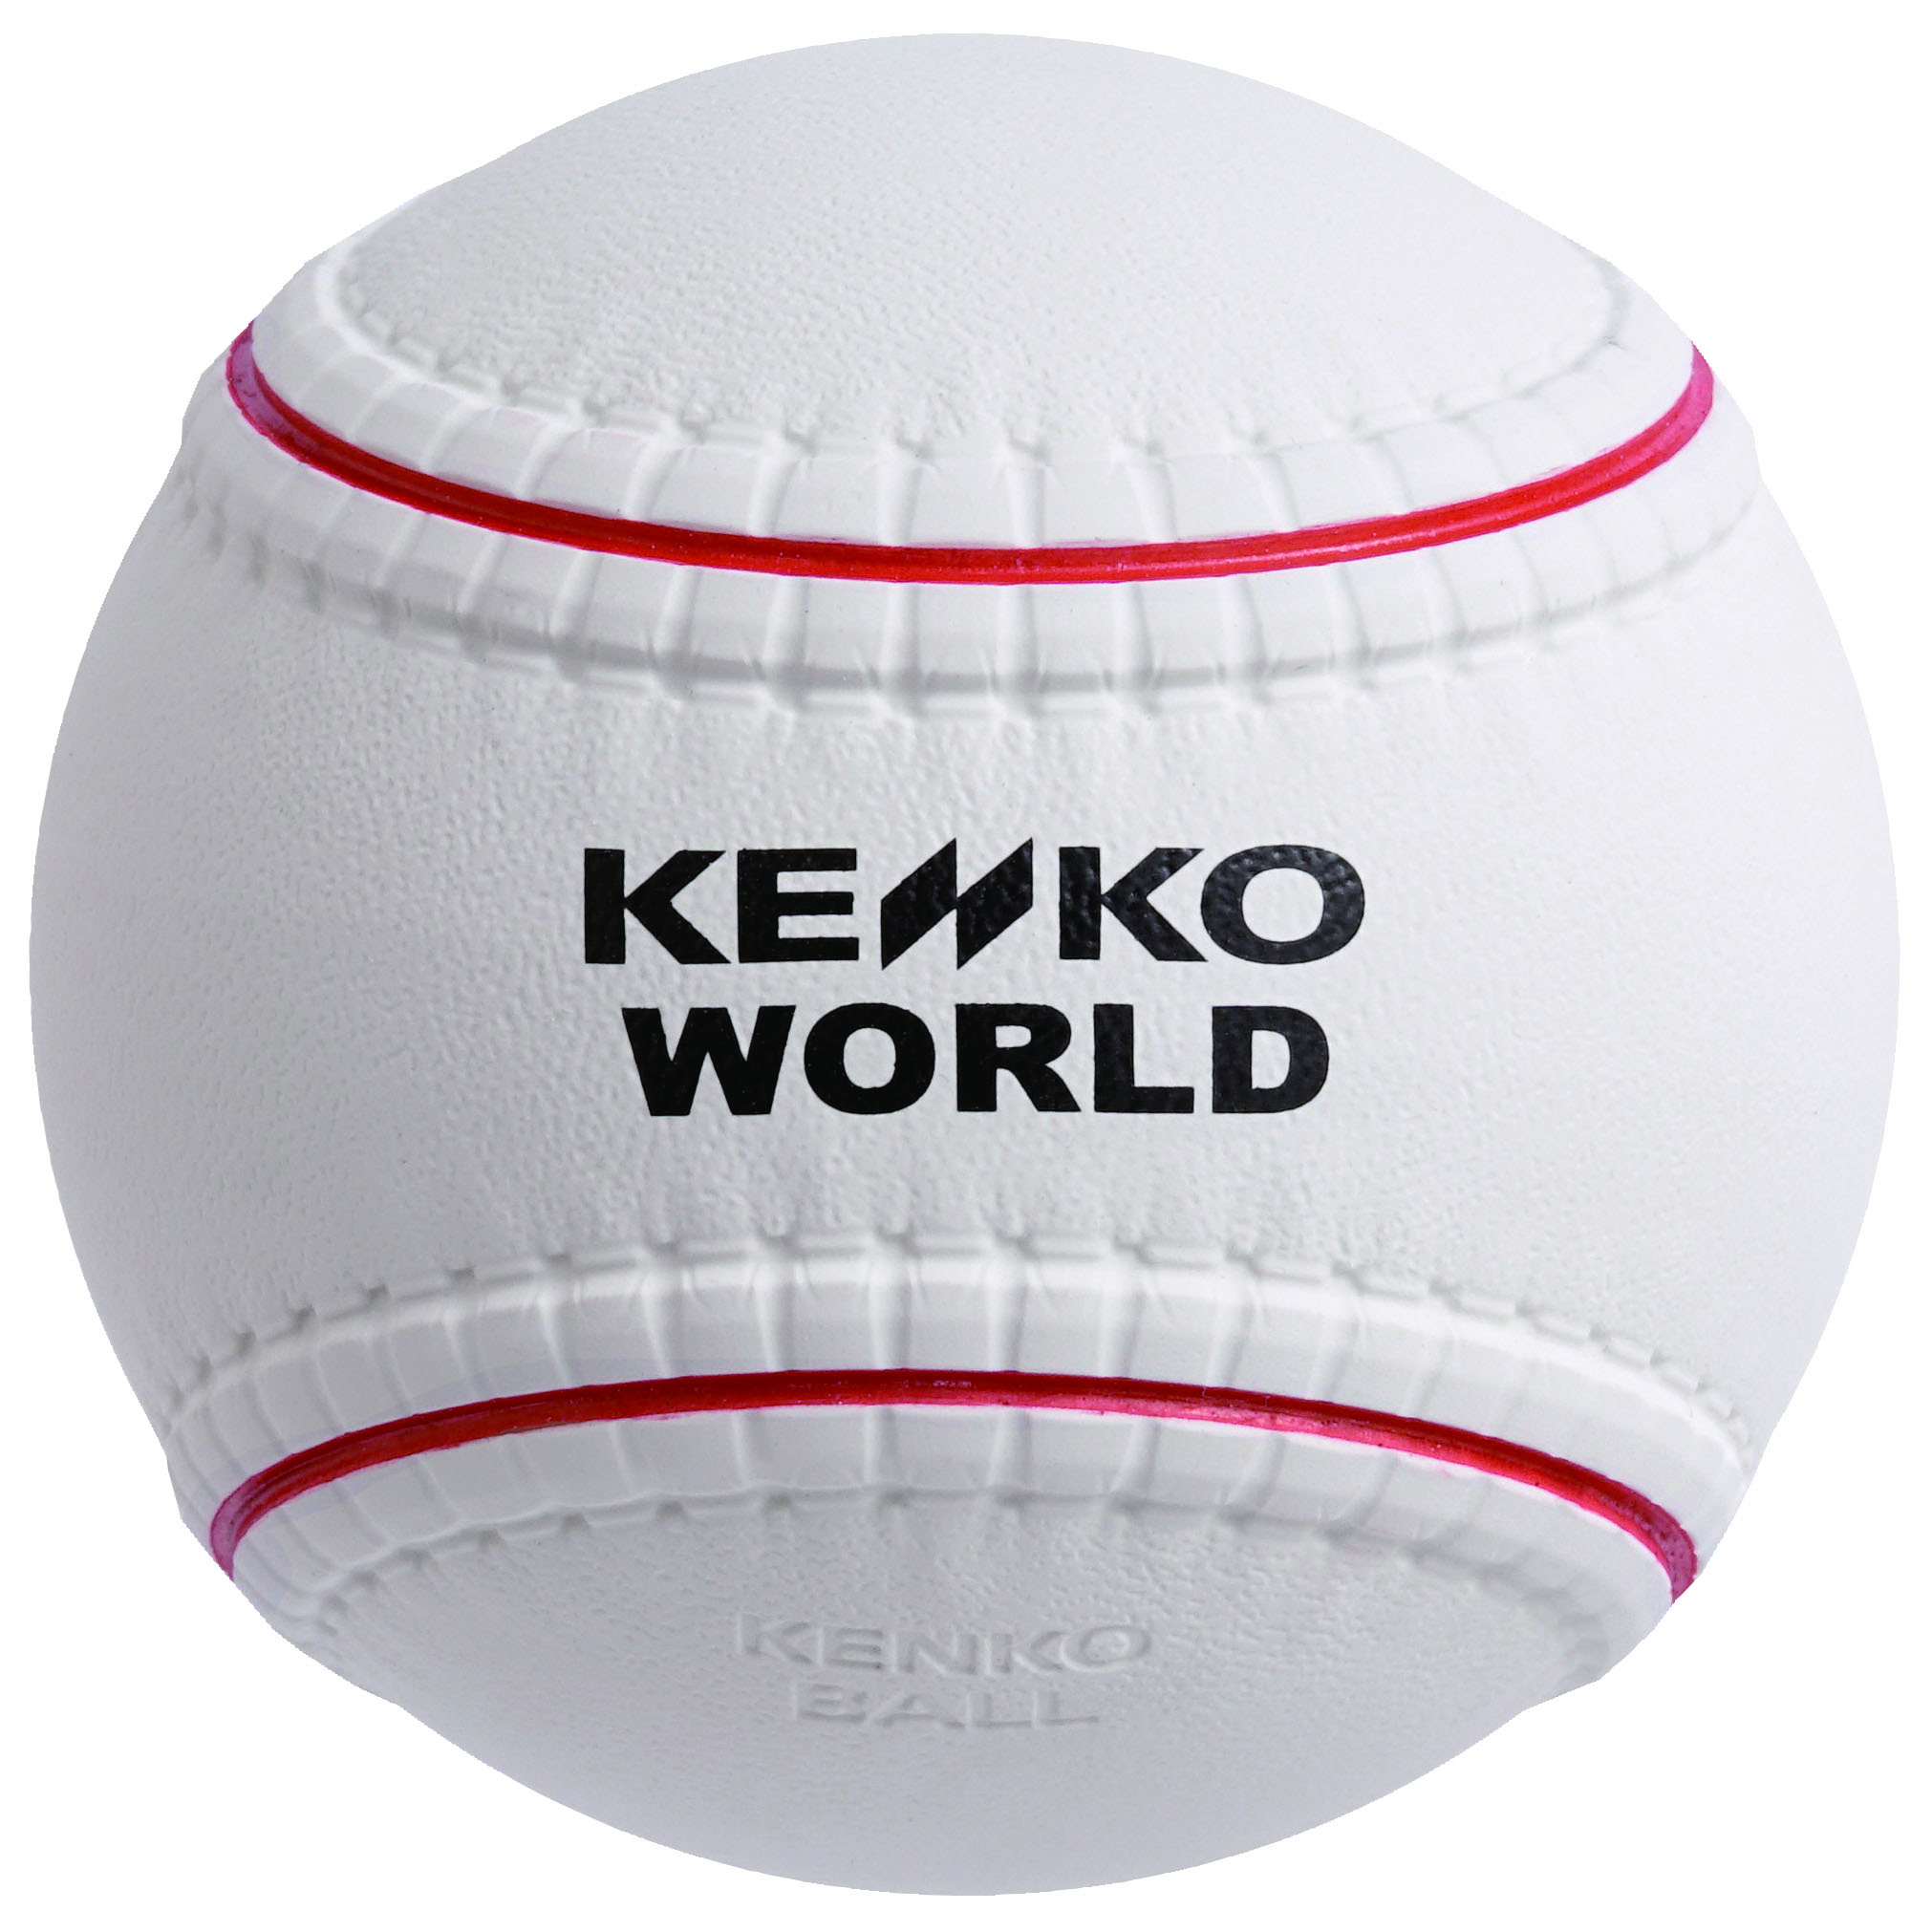 Kenko World C 8,5 Inch - Forelle Teamsports - American Football 